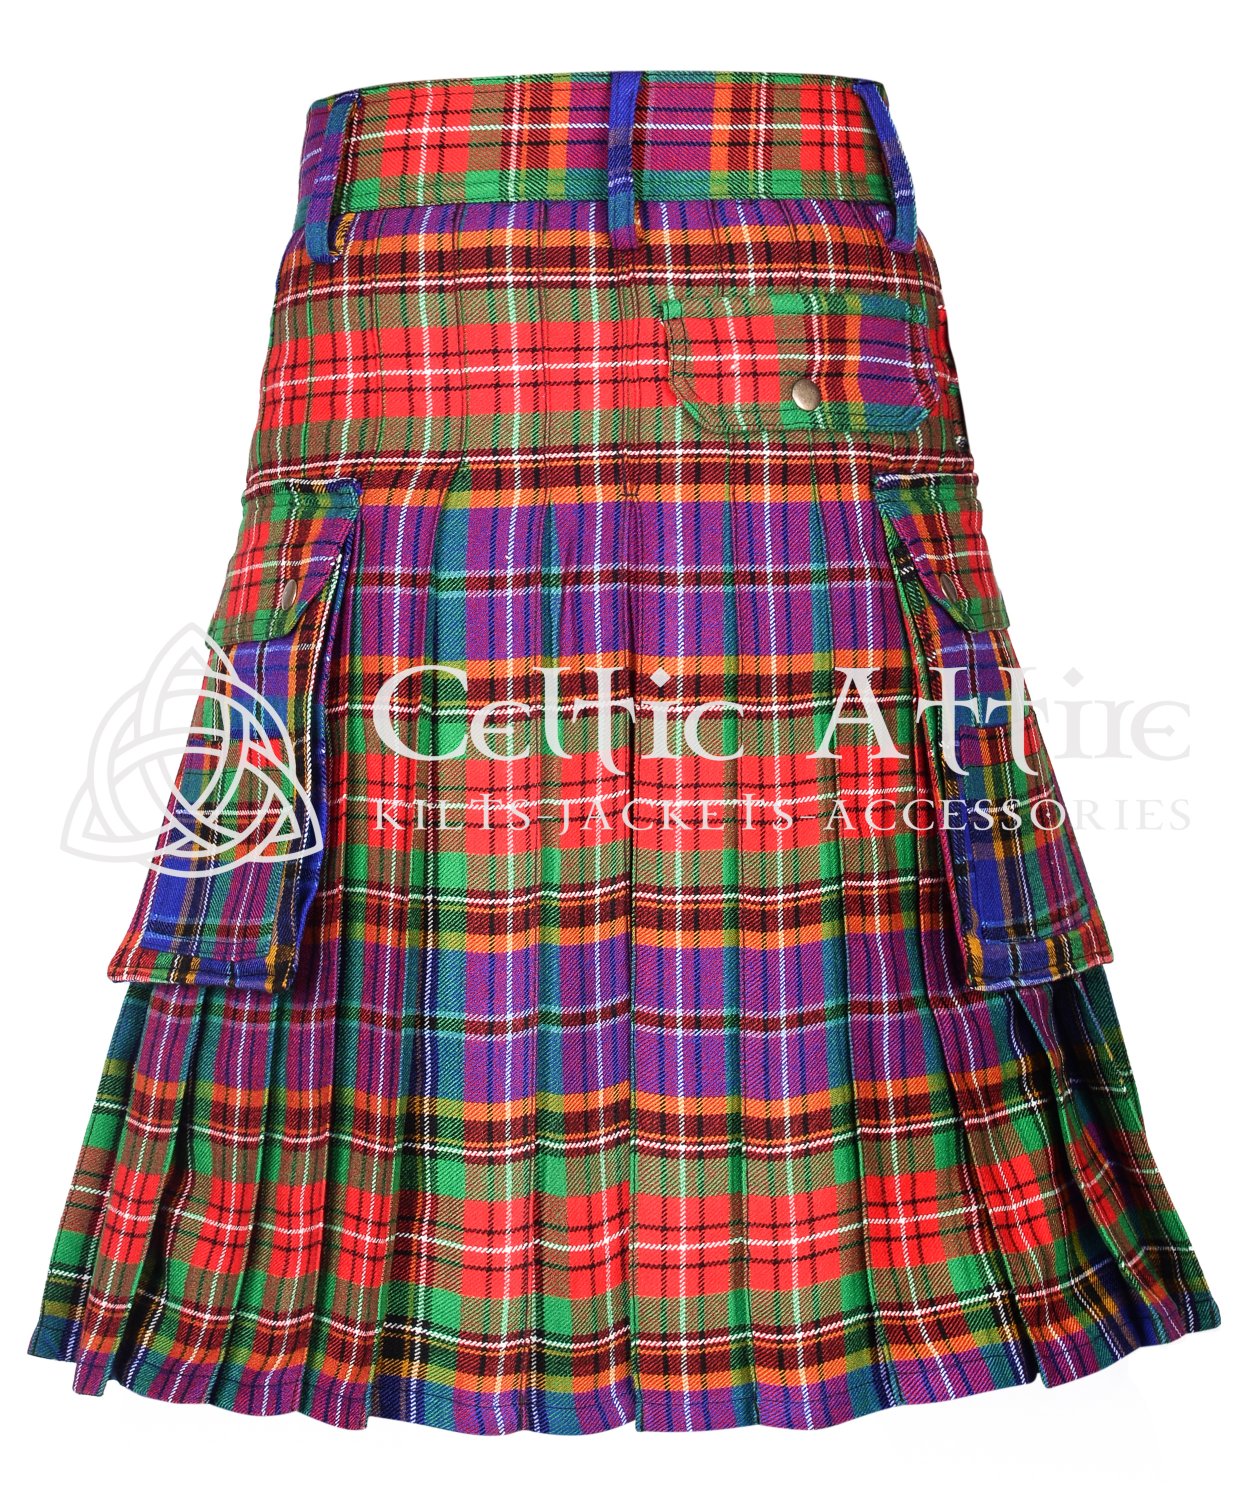 Beattie Clan Utility Tartan Kilt For Men Custom Size 12 Colors